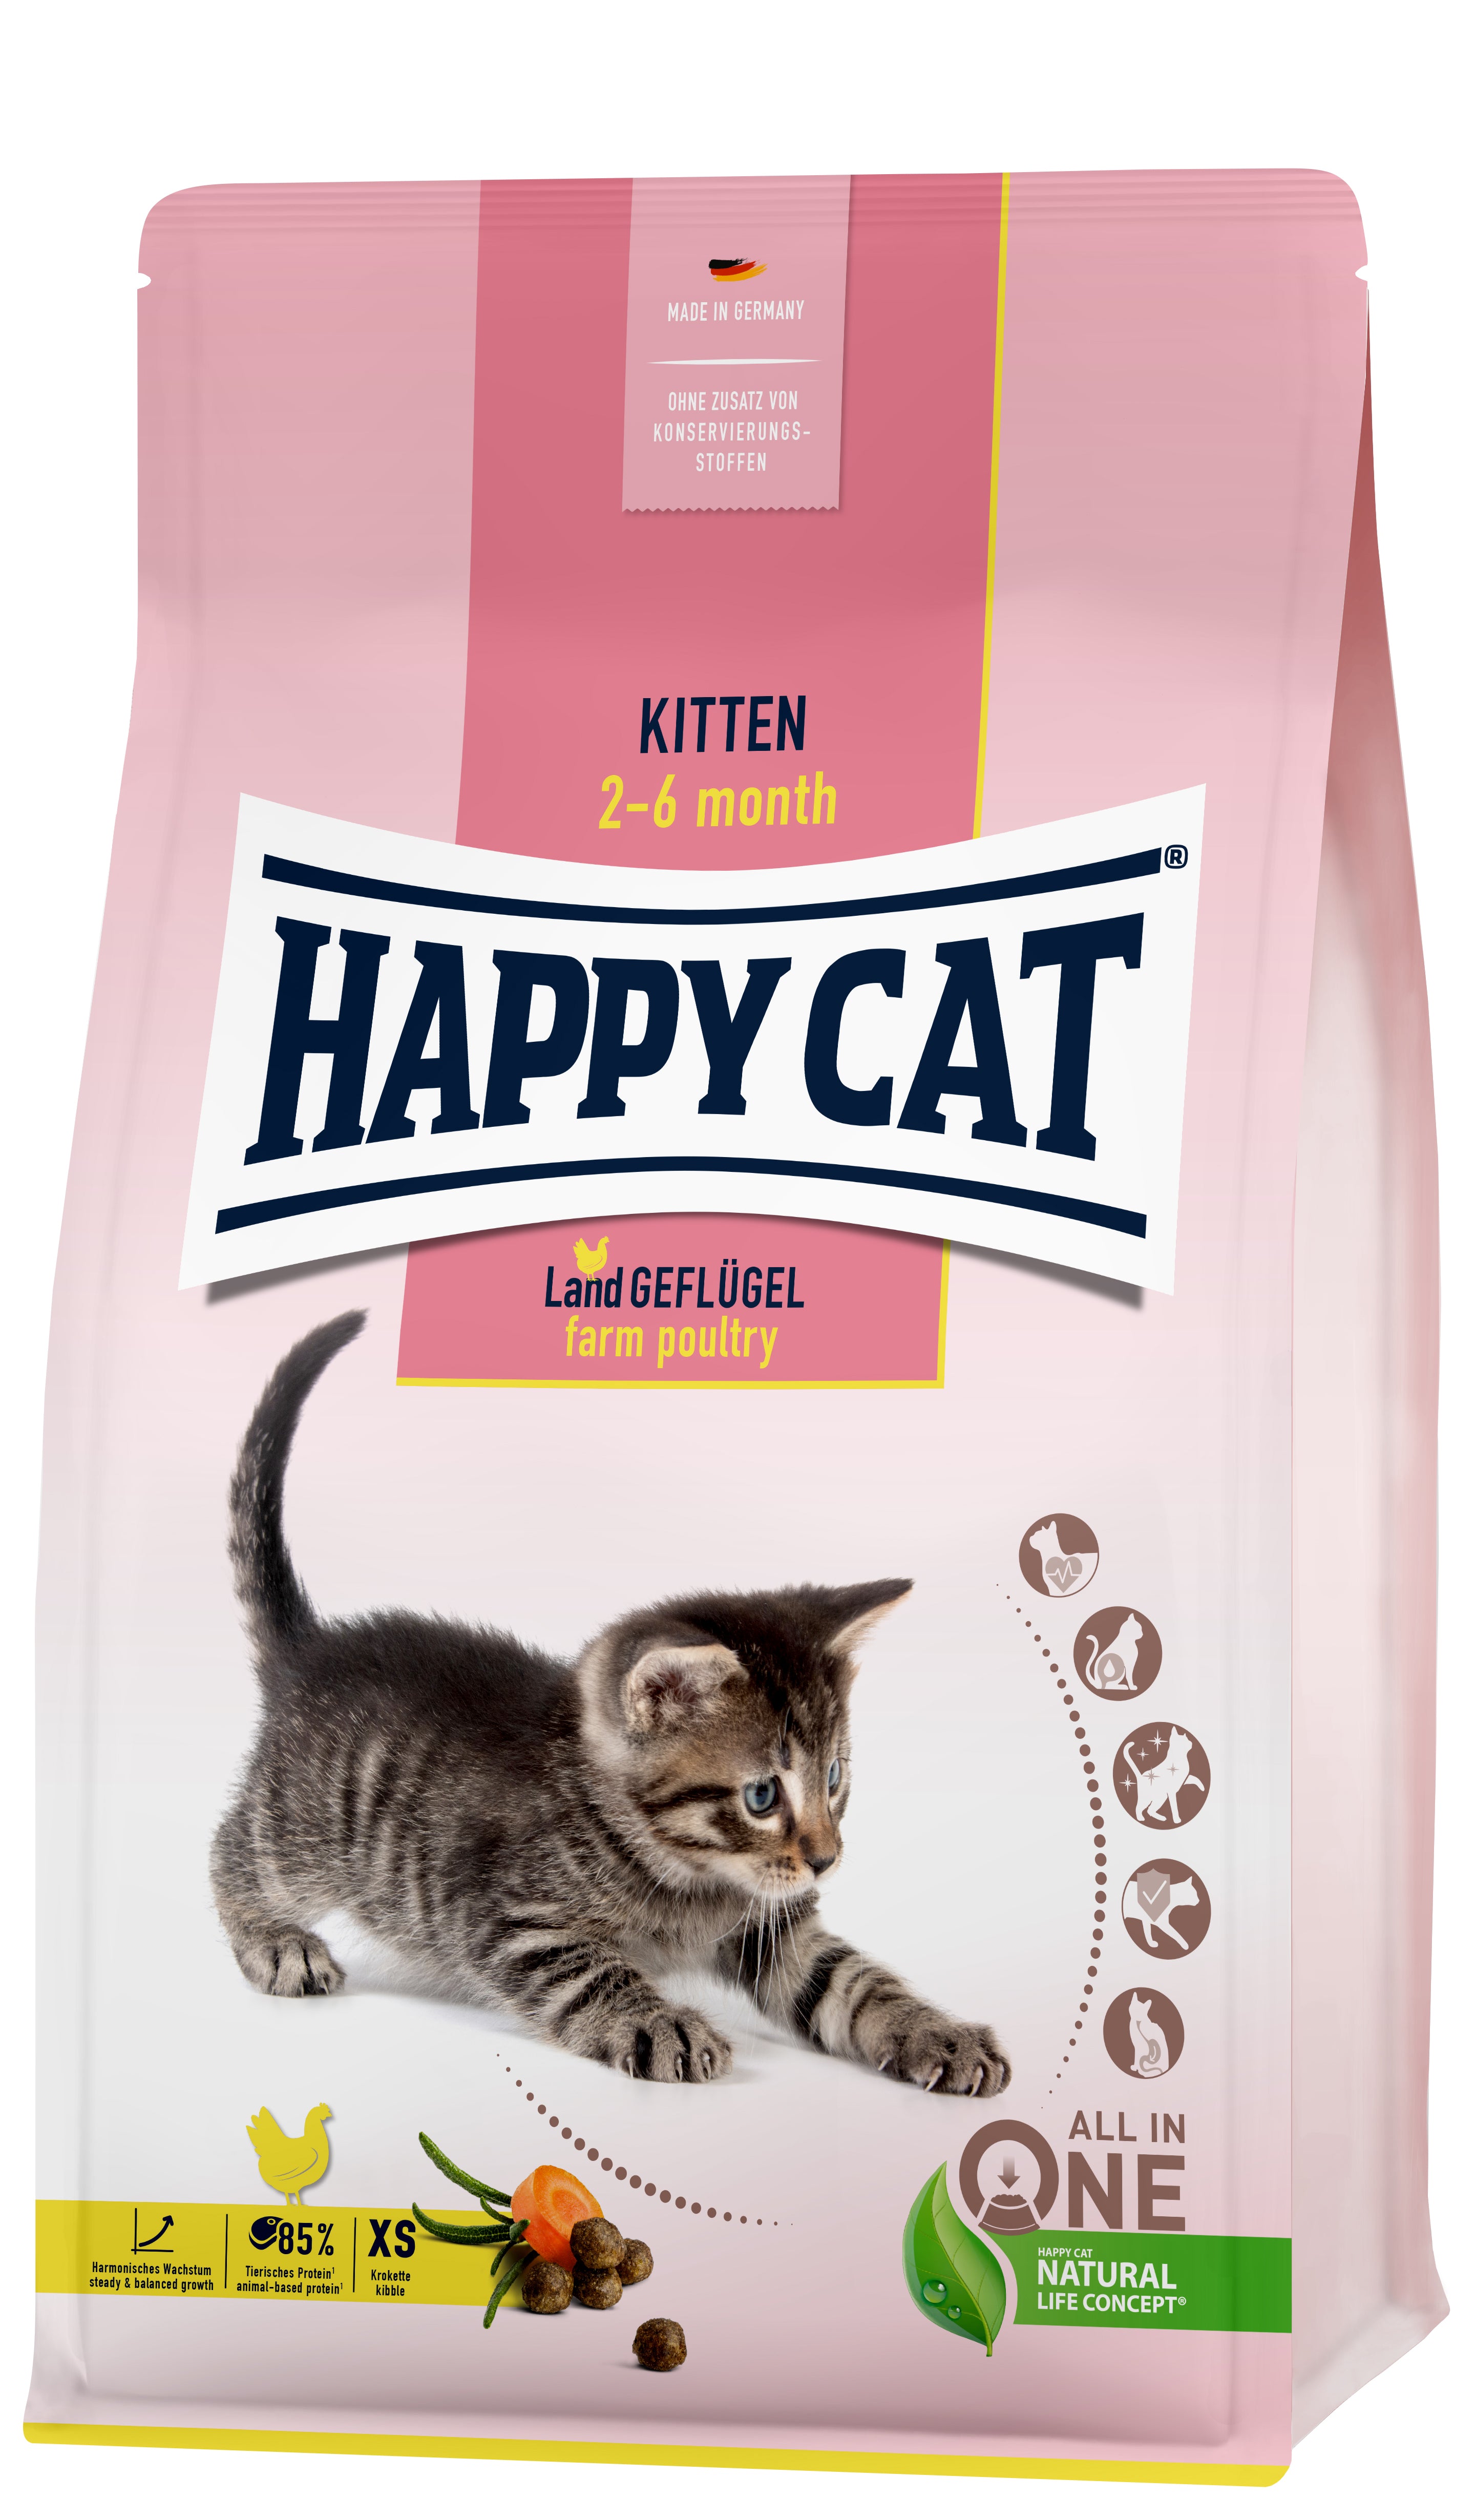 Happy Cat Young Kitten Land Geflügel